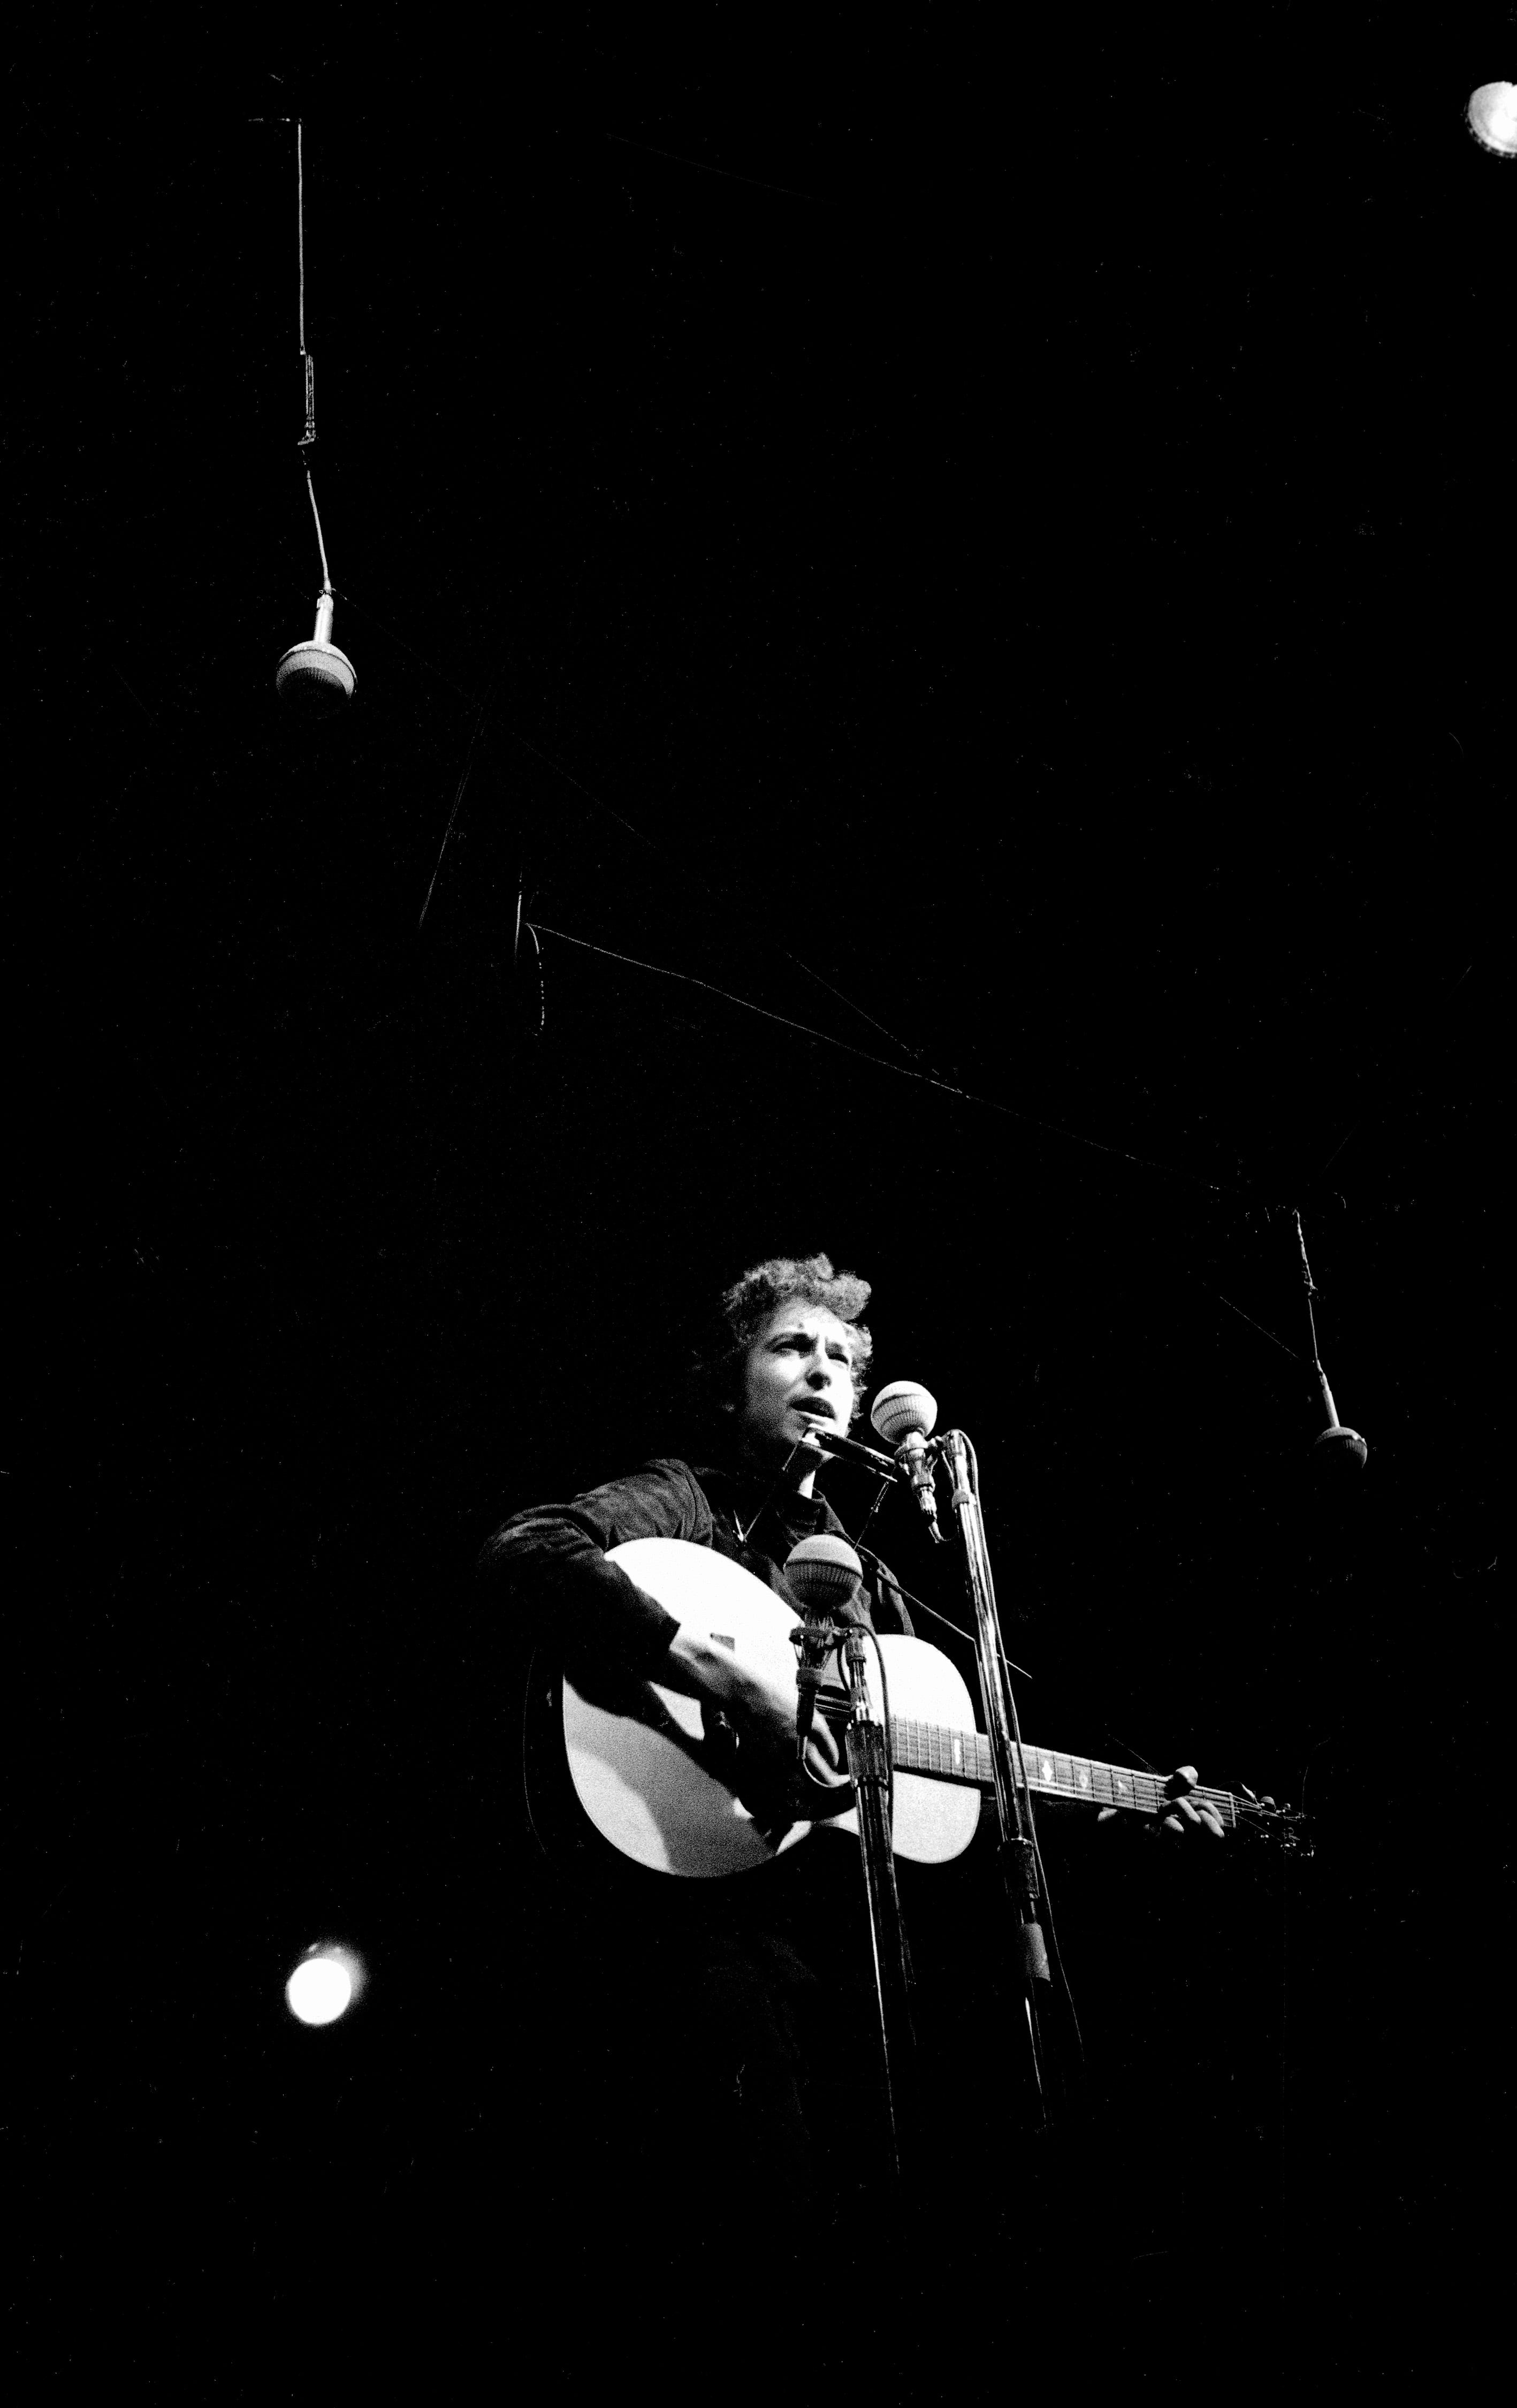 A night time performance by Bob Dylan at Newport Folk Festival, Newport, Rhode Island, 1964